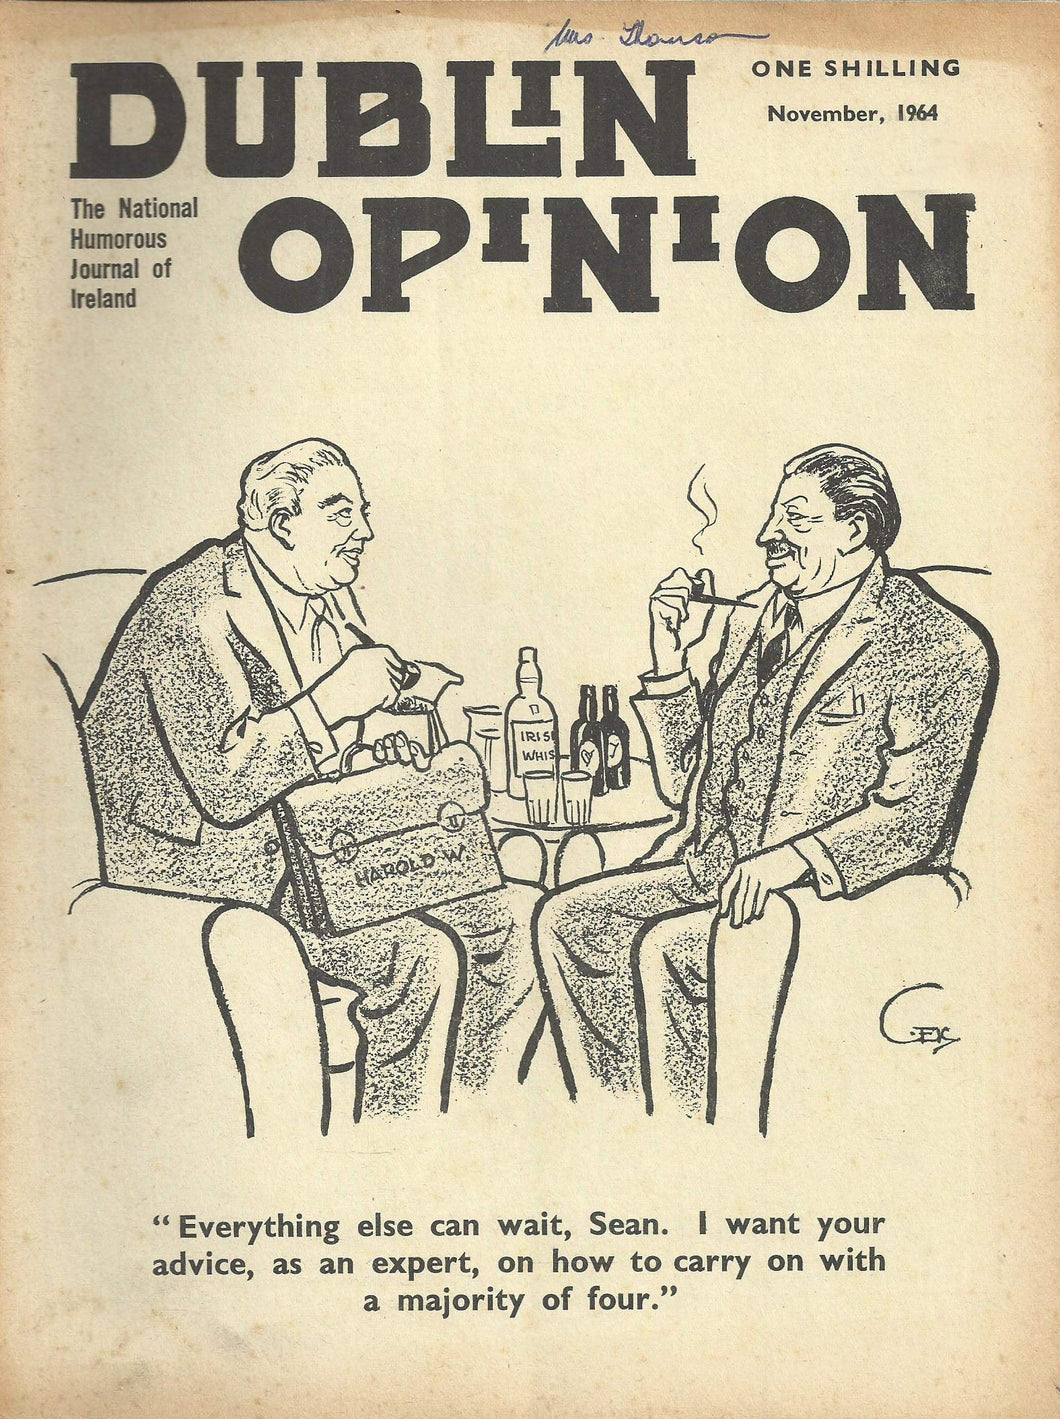 Dublin Opinion - November, 1964 - The National Humorous Journal of Ireland